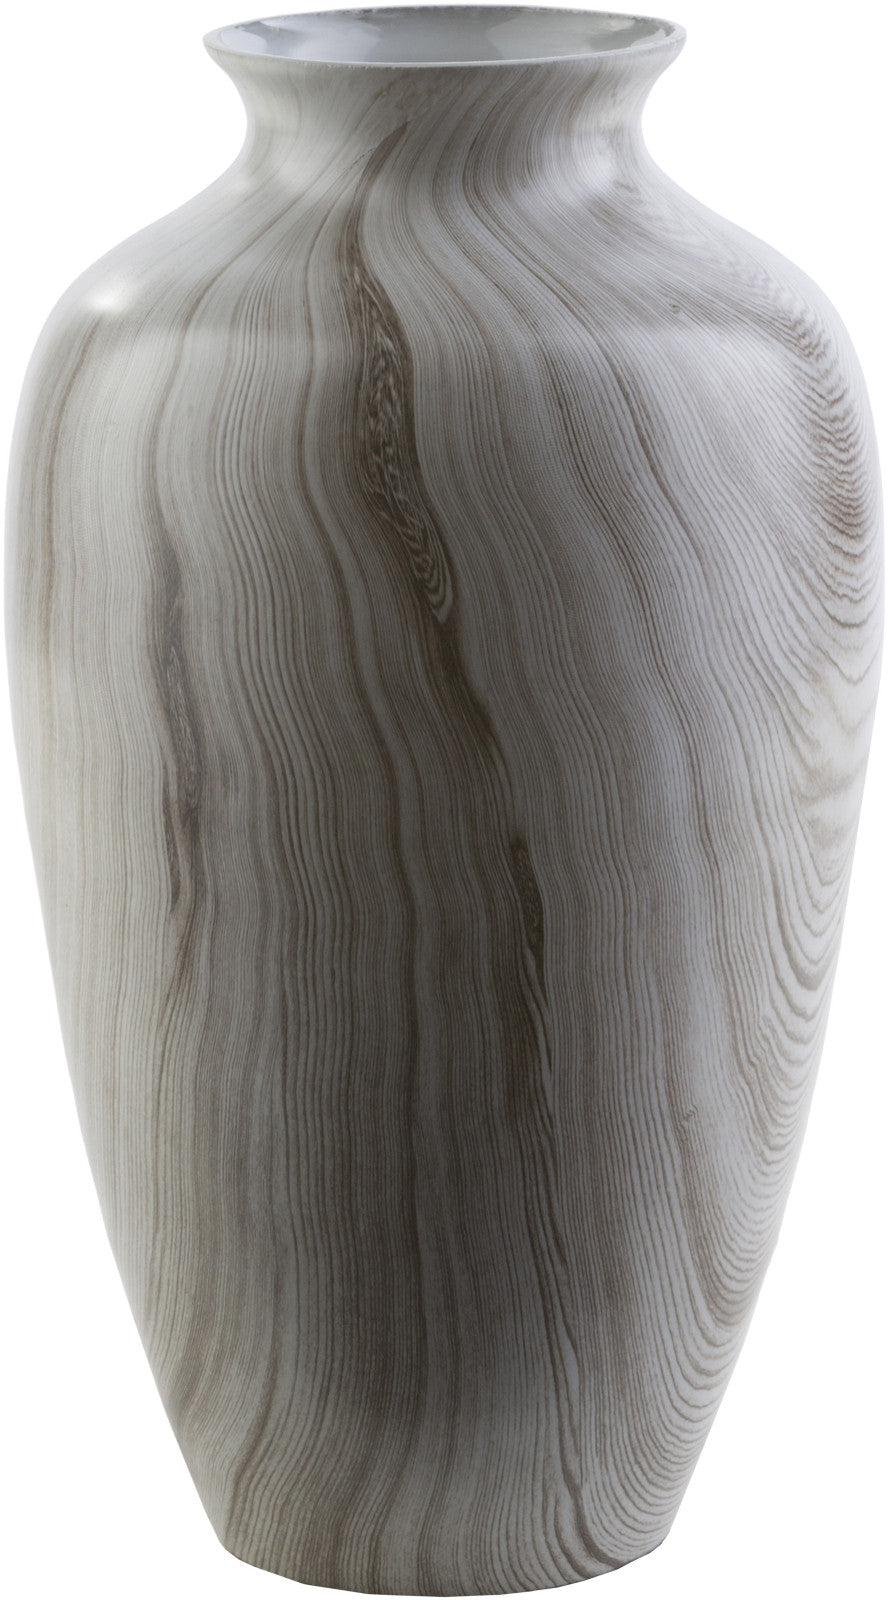 Surya Ortega ORT-802 Vase main image